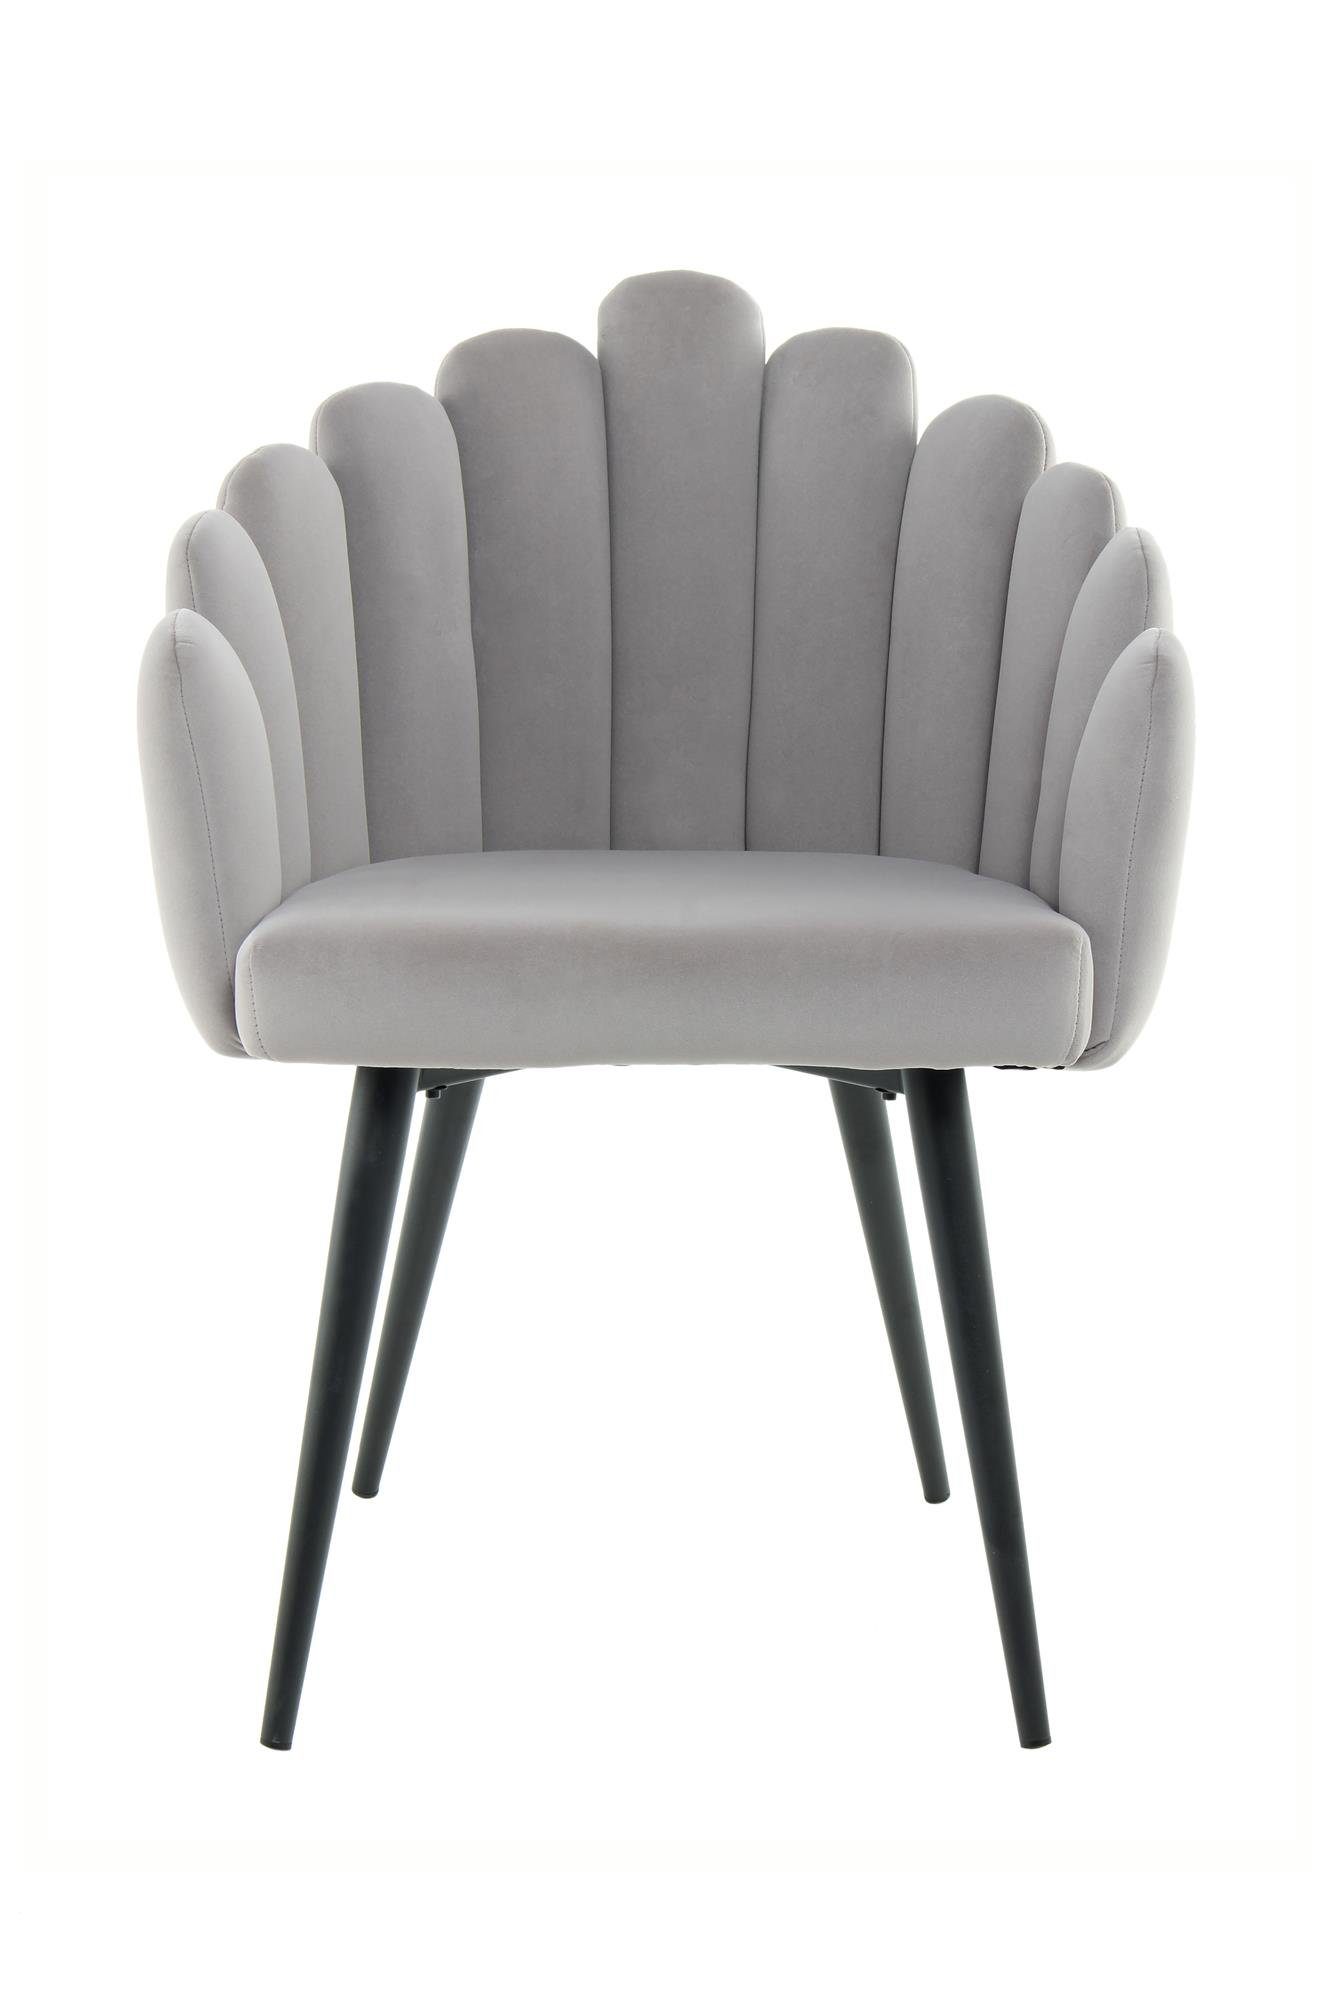 Qiyano Stuhl Sessel Samt-Stuhl Grau Wohnzimmer | Grau mit Armlehne Muschel-Form